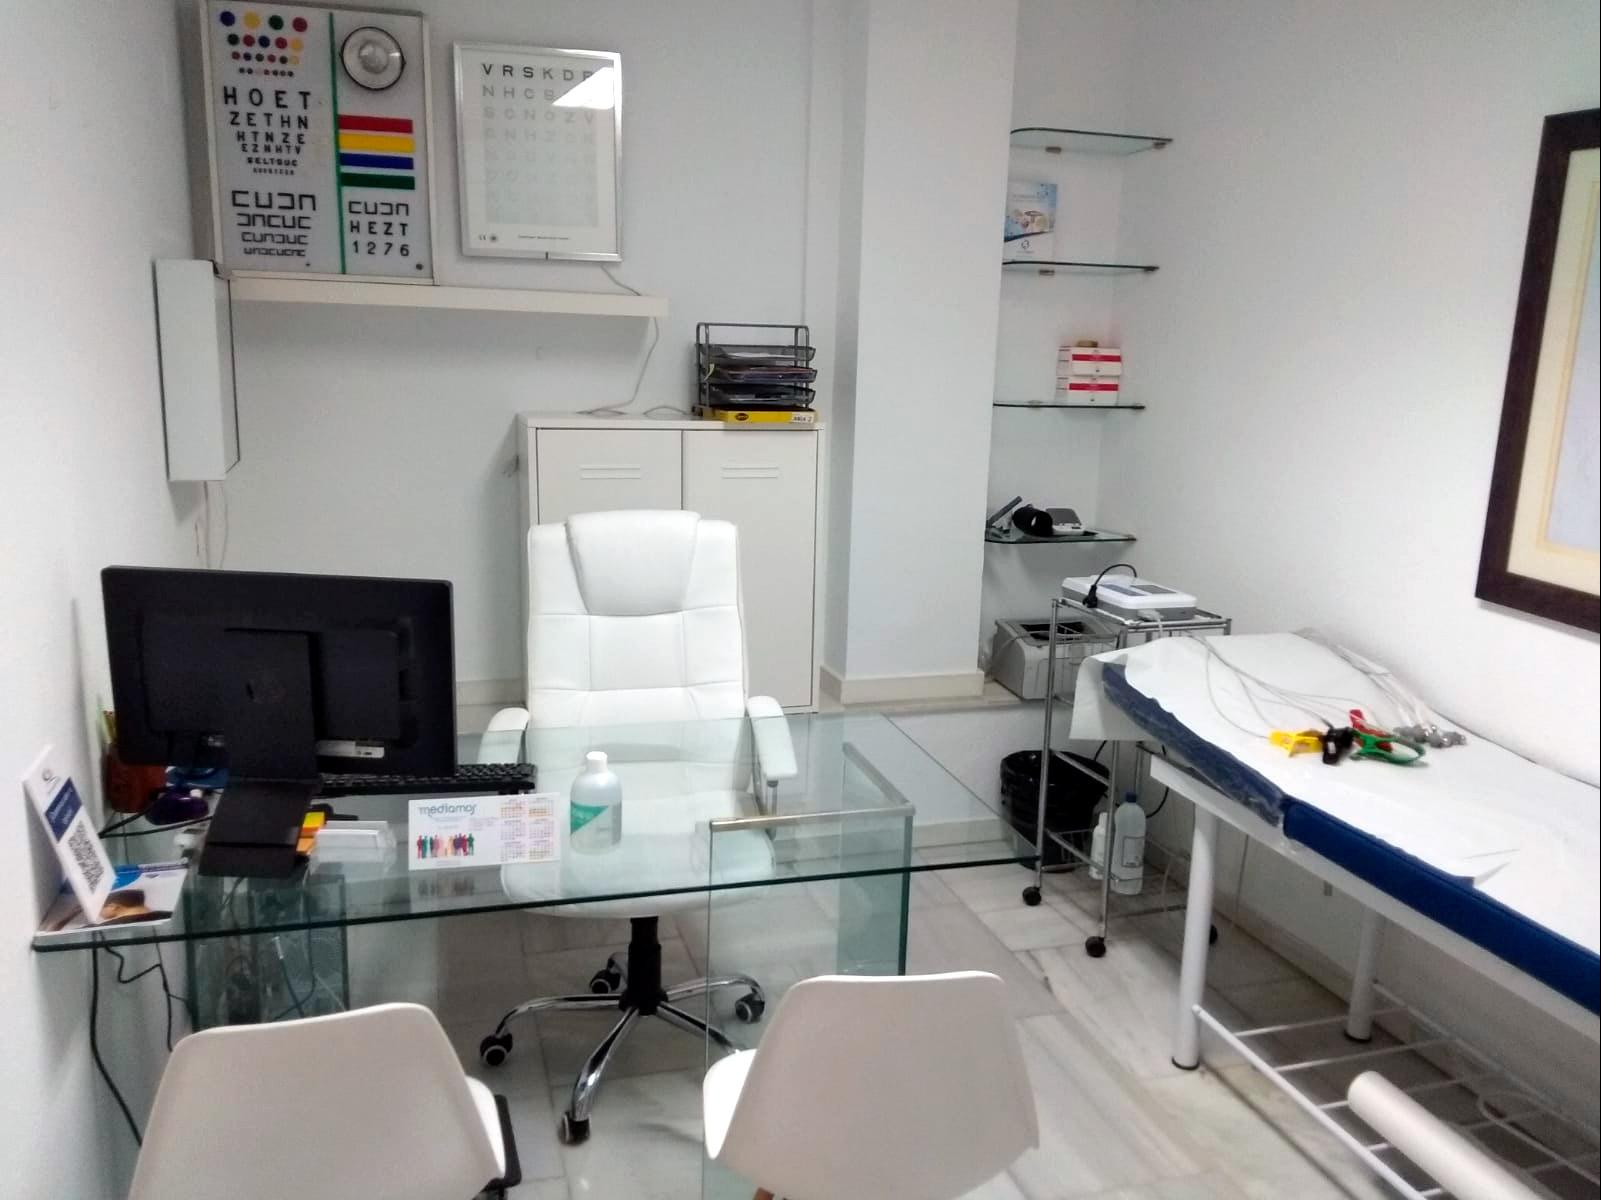 Alquiler de consultas médicas en Málaga Clínica Muelle Heredia